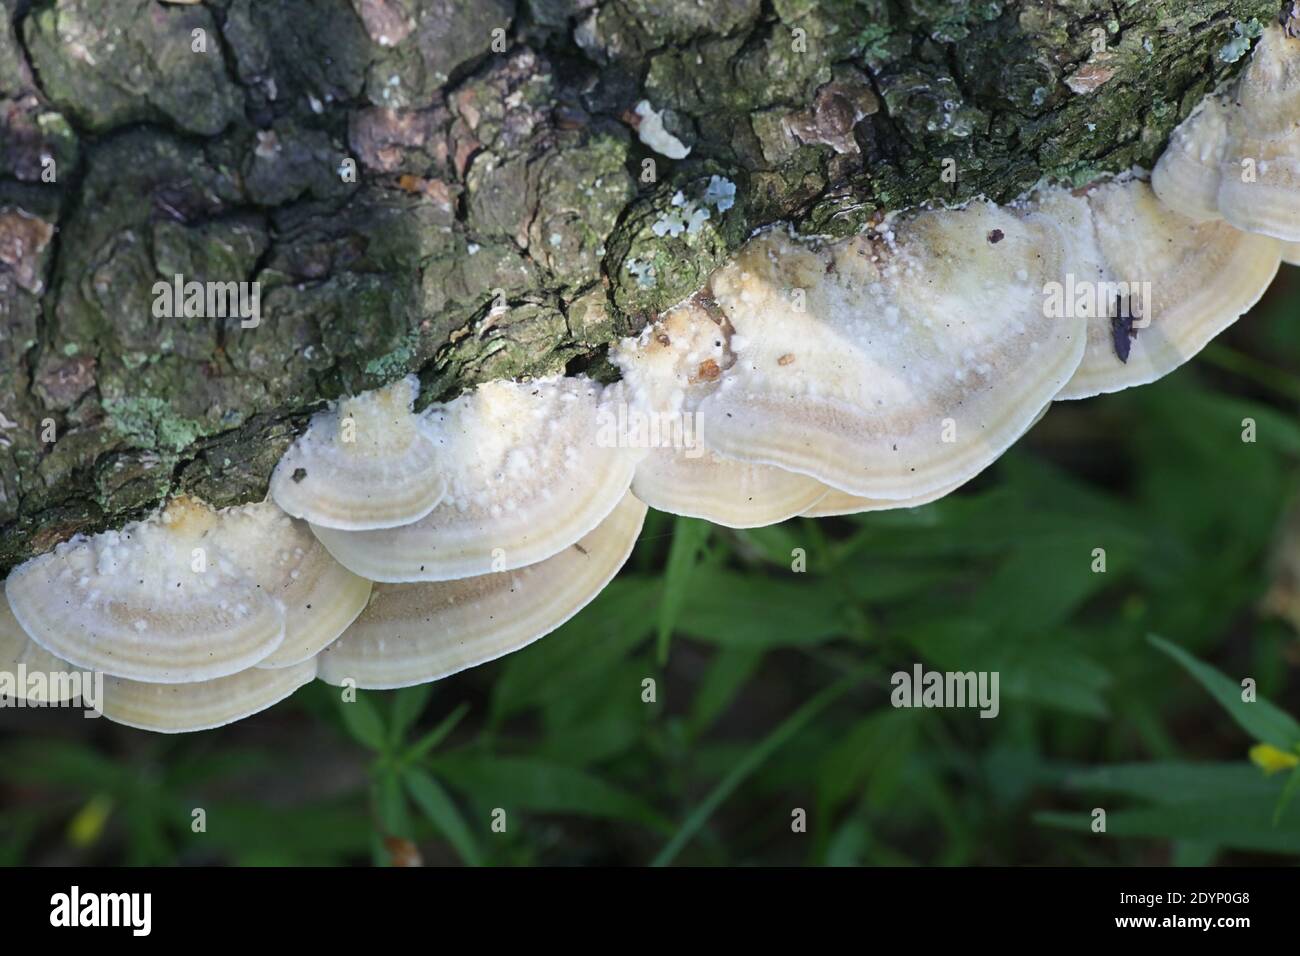 Trametes ochracea, known as ochre bracket fungus, mushrooms from Finland Stock Photo